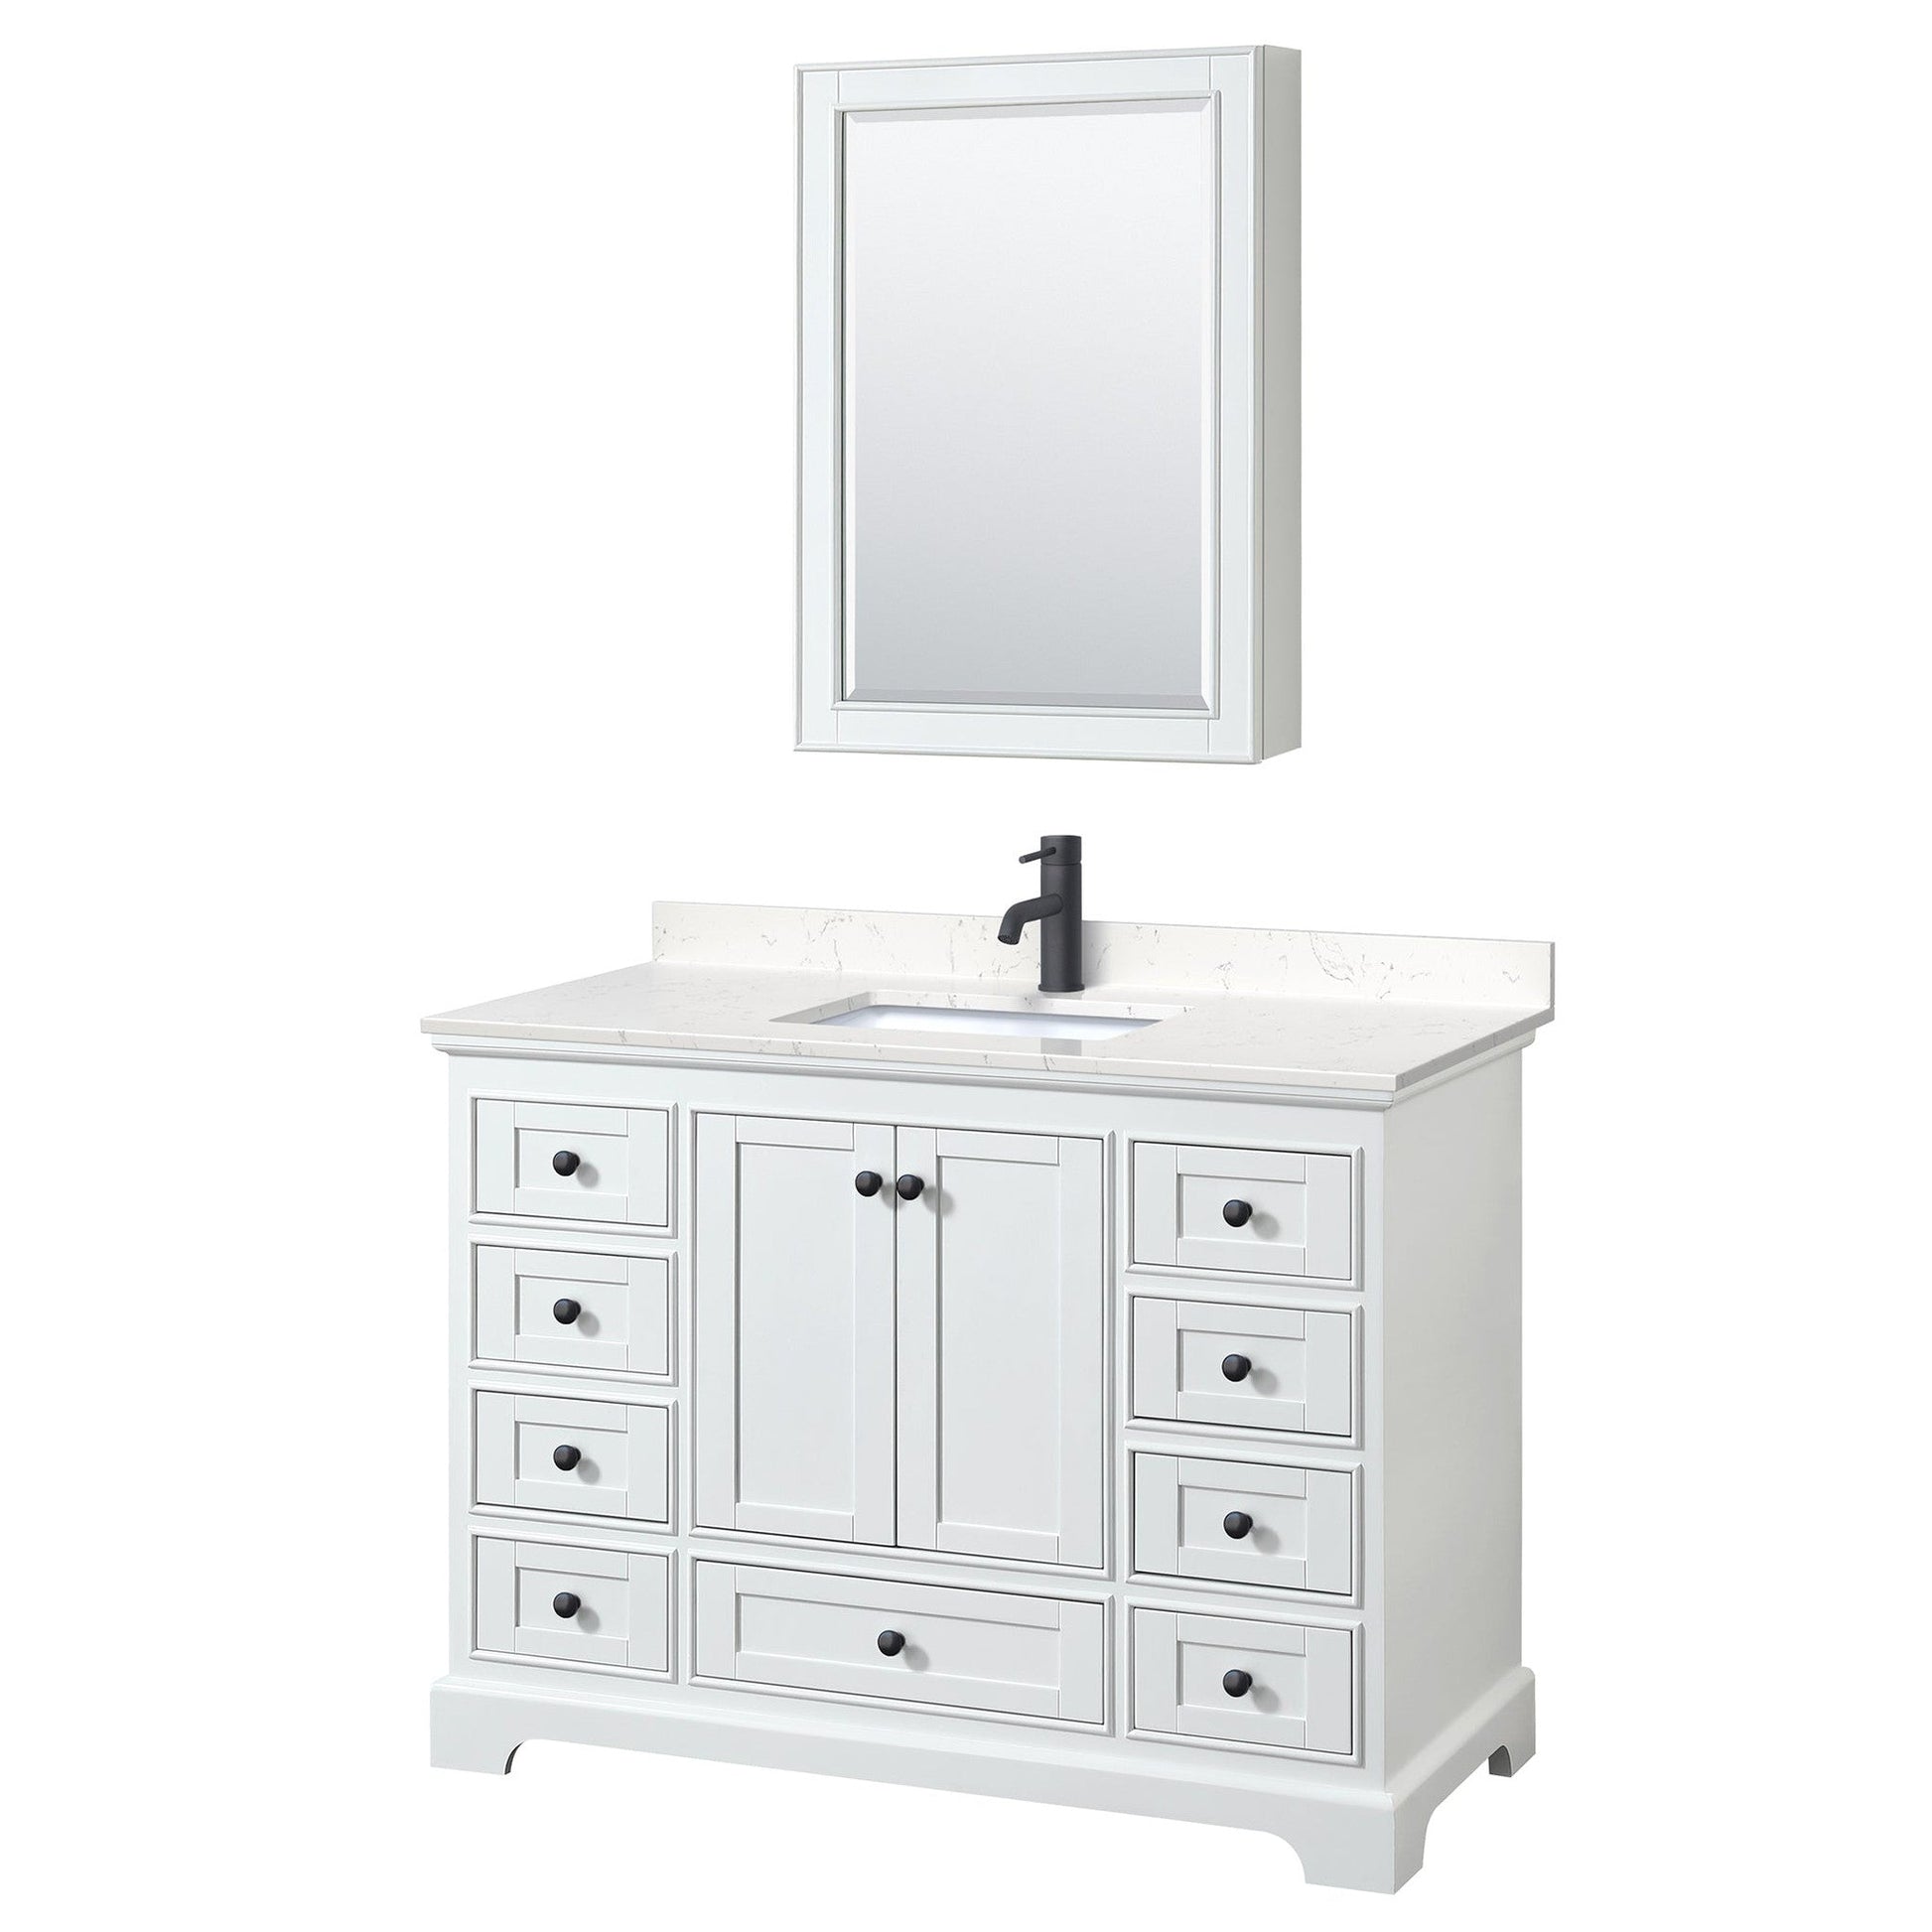 Deborah 48" Single Bathroom Vanity in White, Carrara Cultured Marble Countertop, Undermount Square Sink, Matte Black Trim, Medicine Cabinet